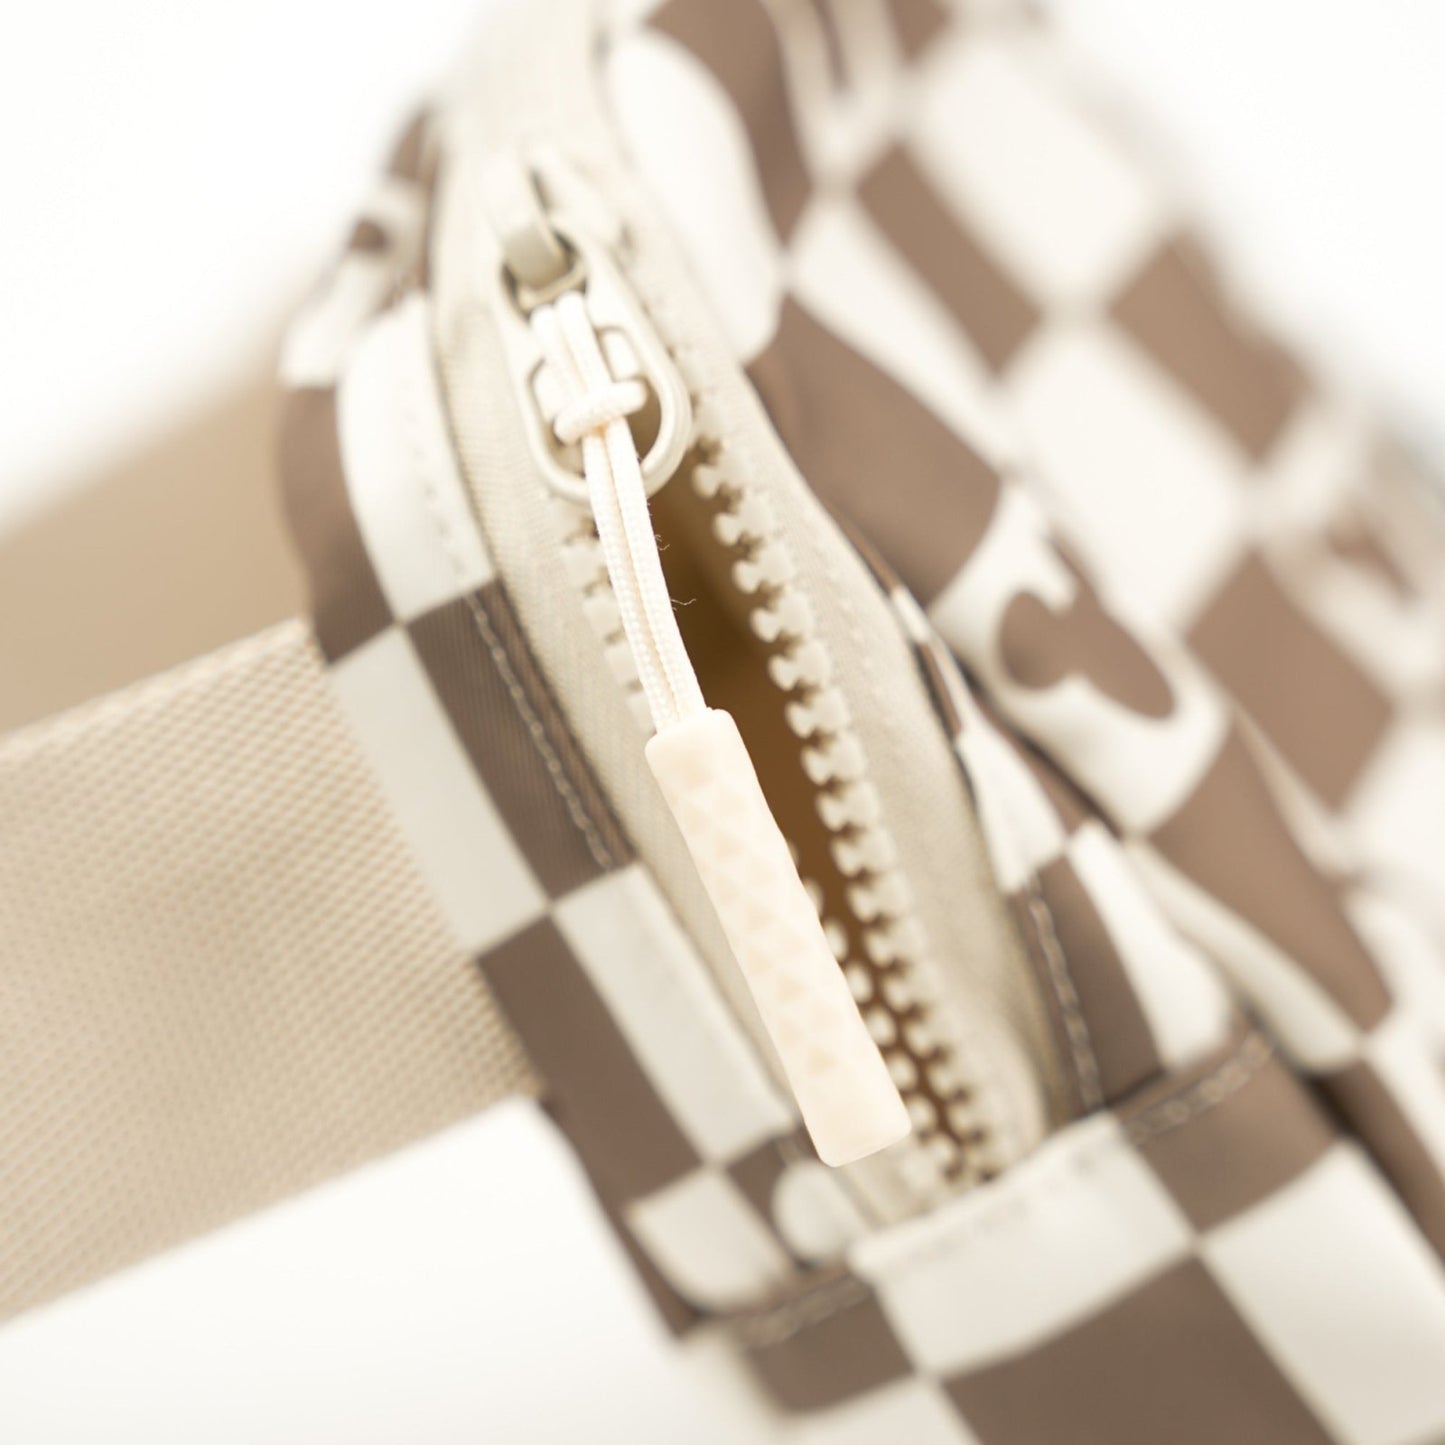 Checkered Mouse Belt Bag